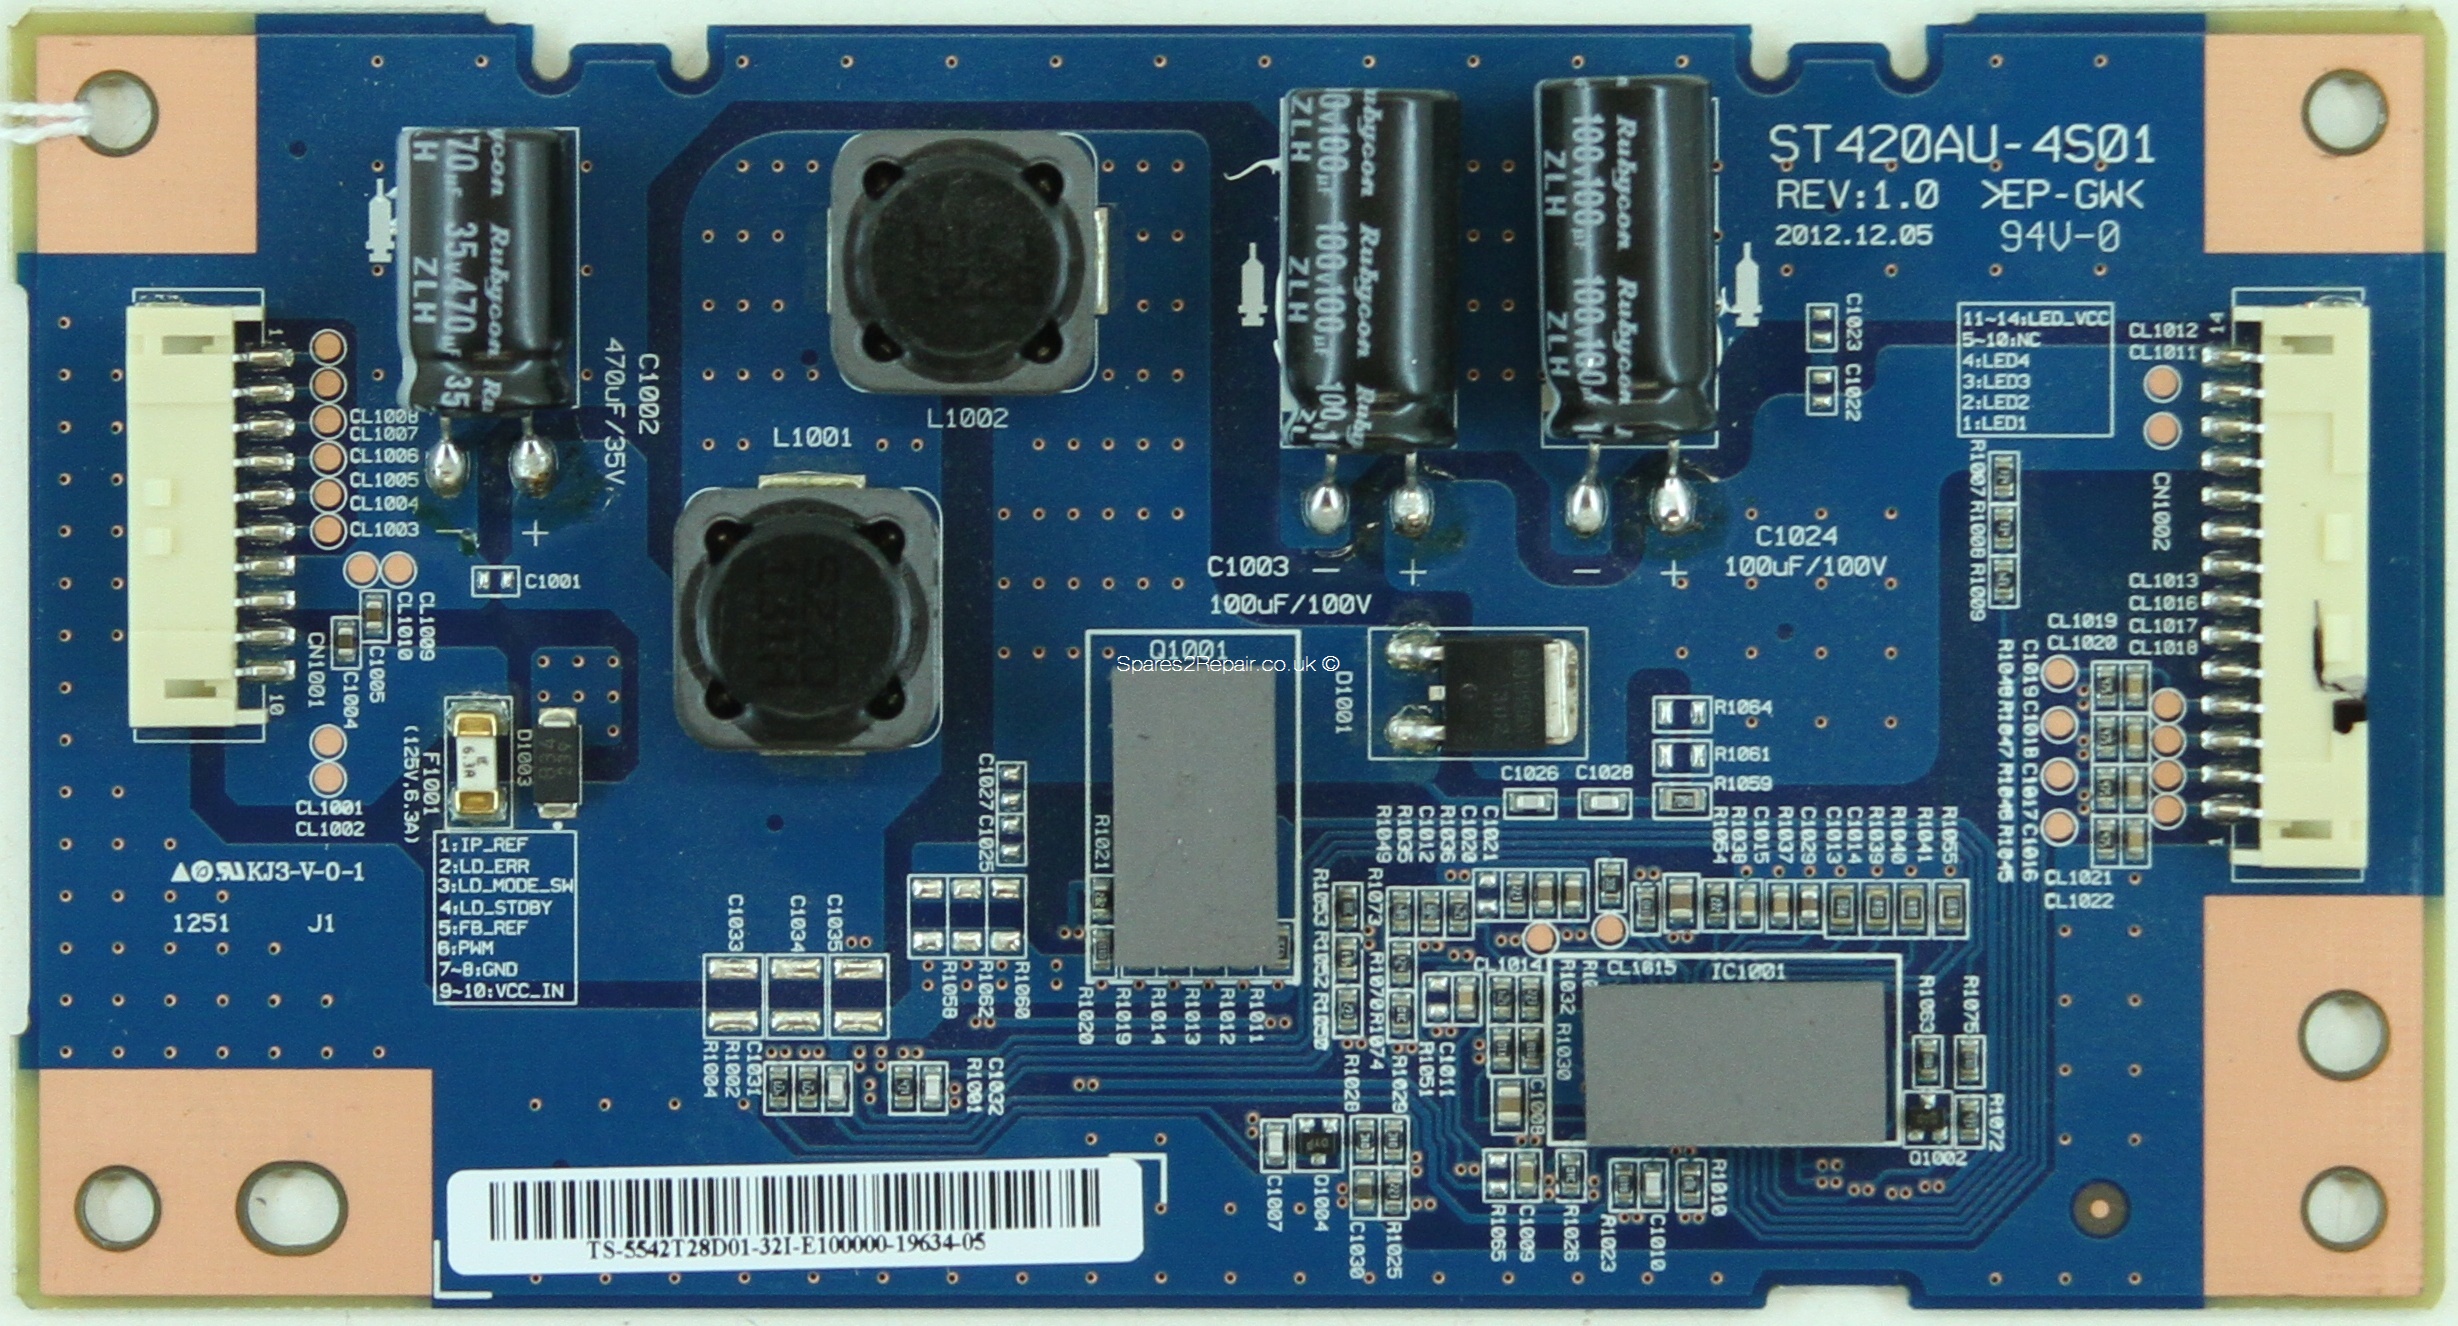 Sony KDL-32W653A - LED Driver Board - ST420AU-4S01 - REV:1.0 - 55.42T28.D01